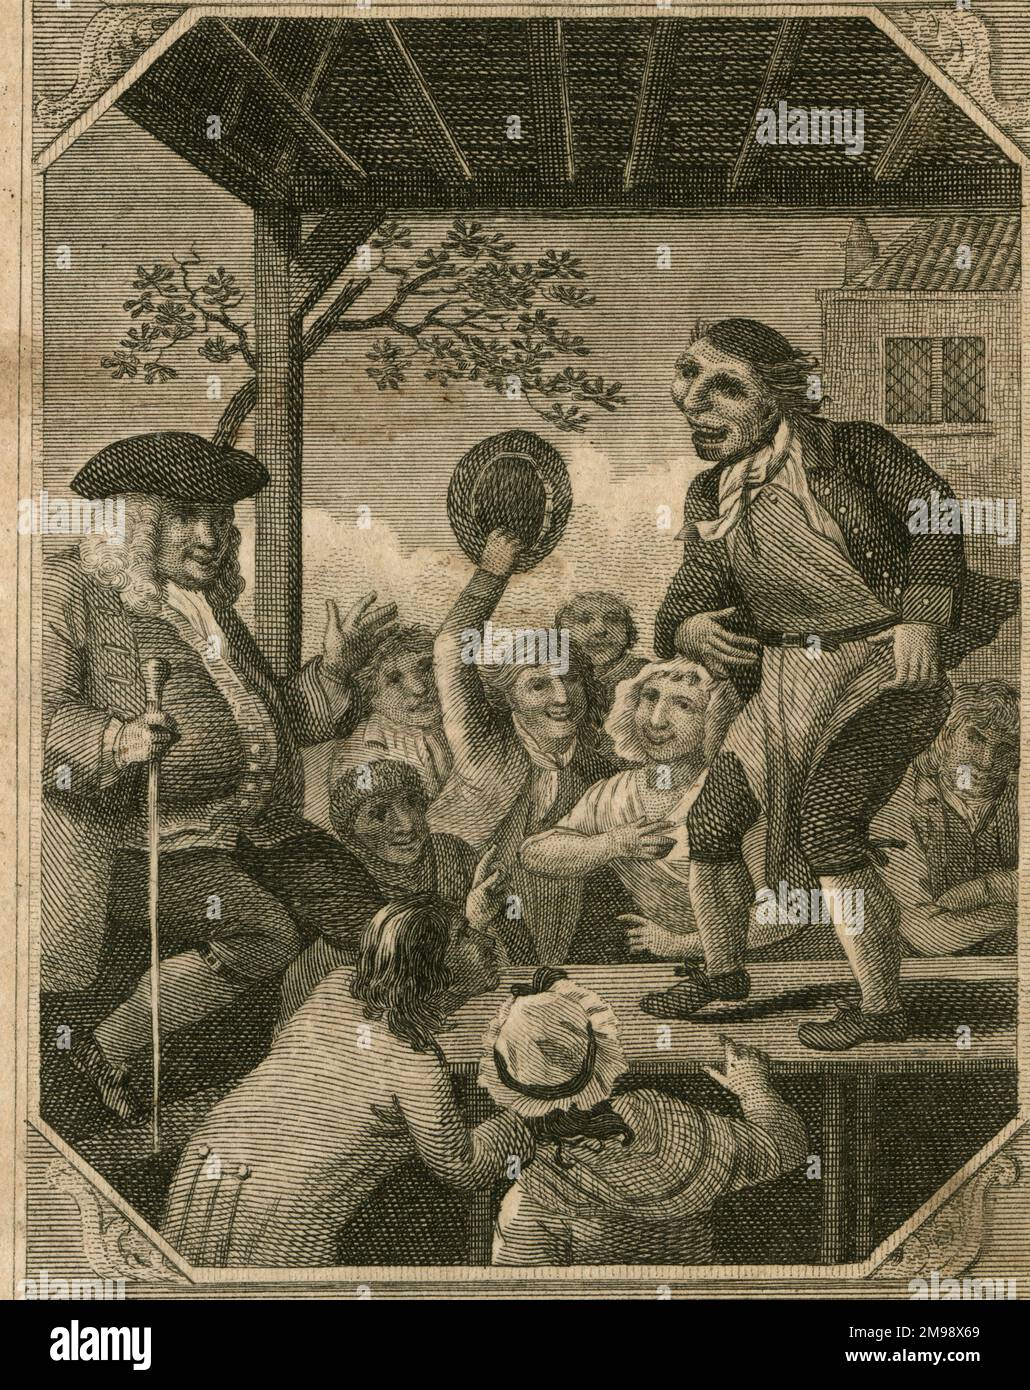 Scene of 18th century entertainment. Stock Photo